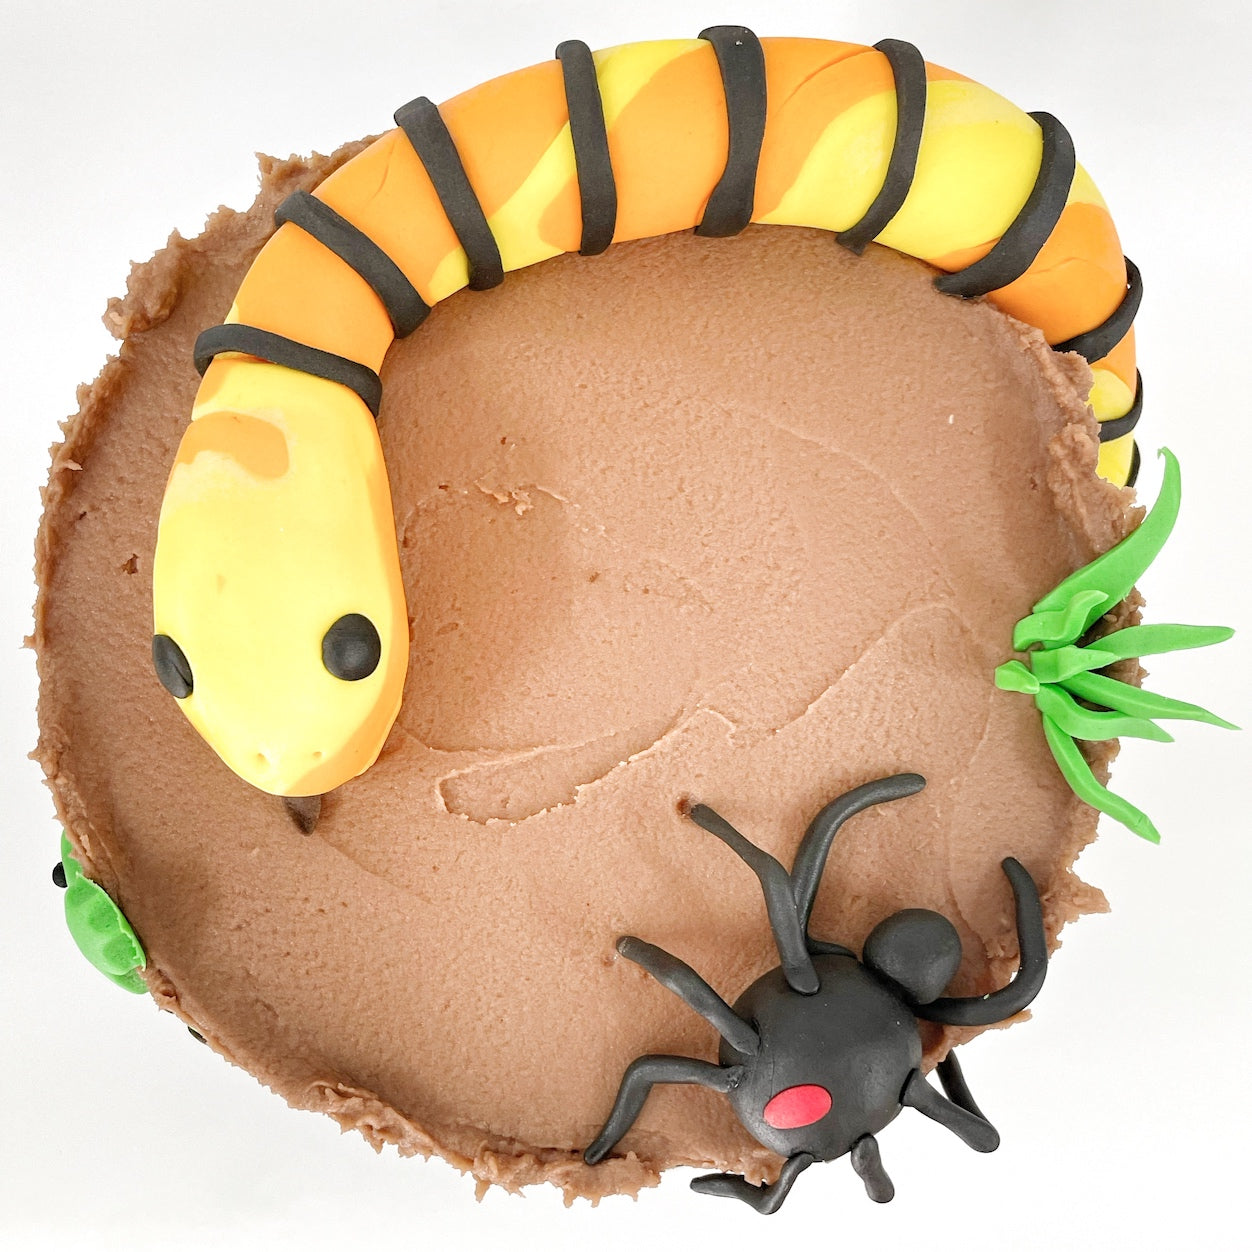 Coolest Lizard Cake | Lizard cake, Cool birthday cakes, Animal cakes